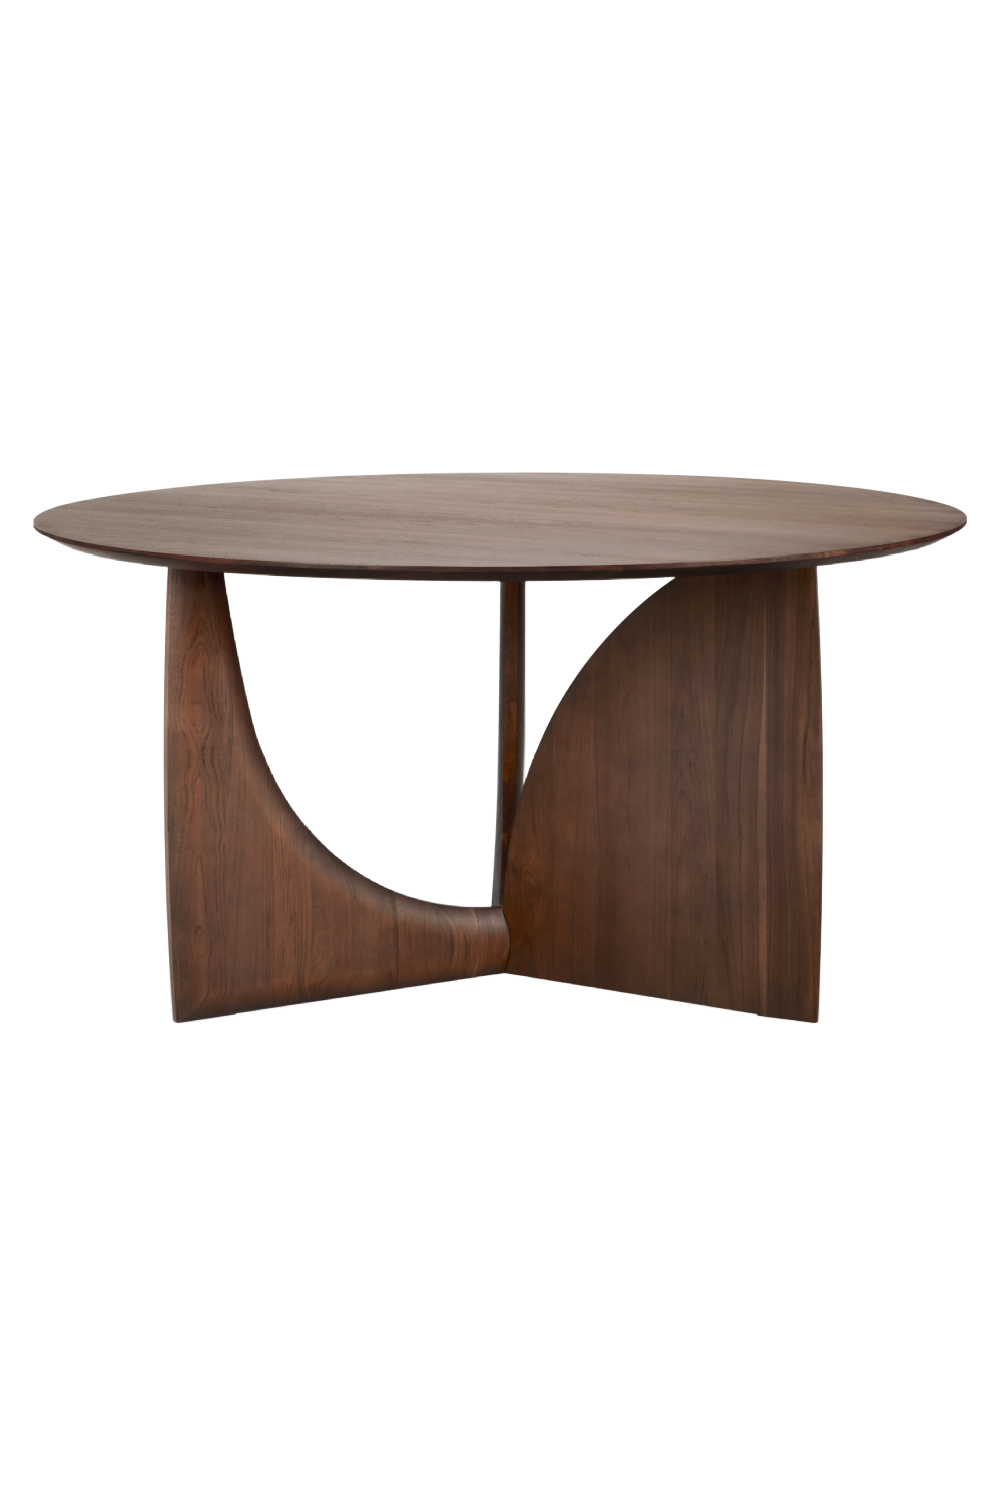 Image of Brown Teak Dining Table | Ethnicraft Geometric